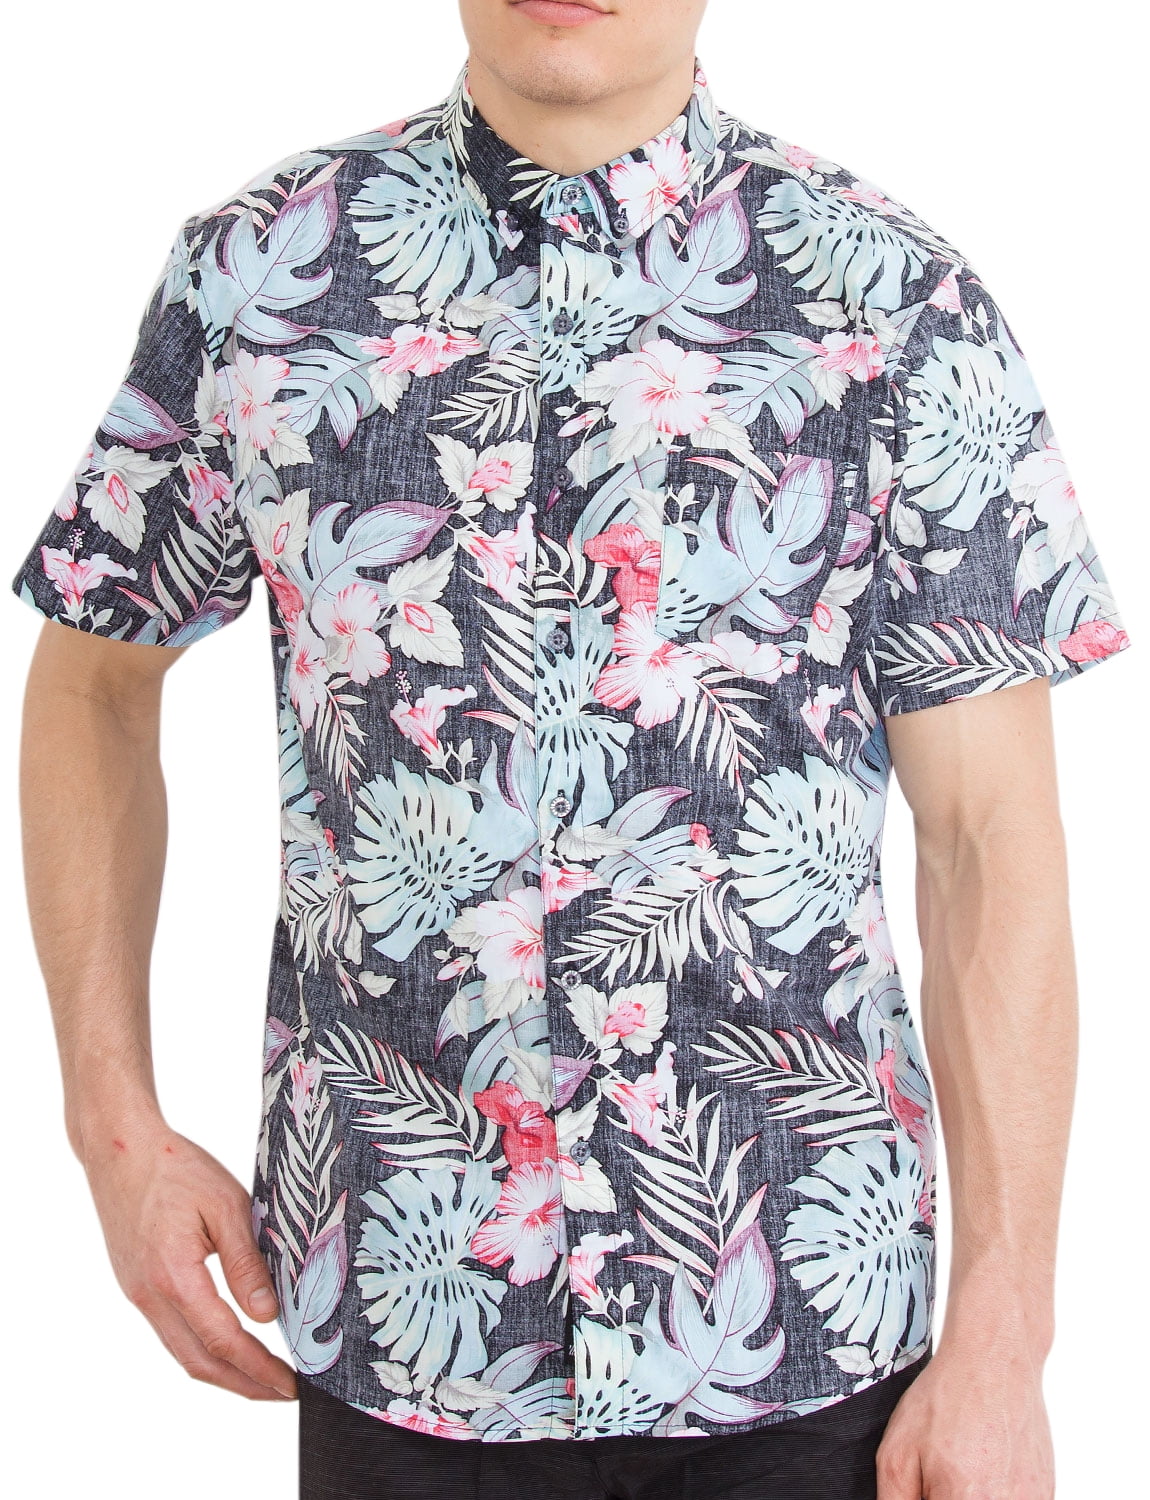 PIZZ ANNU Mens Summer Big Size Print Short Sleeve Casual Tropical Hawaiian Shirts